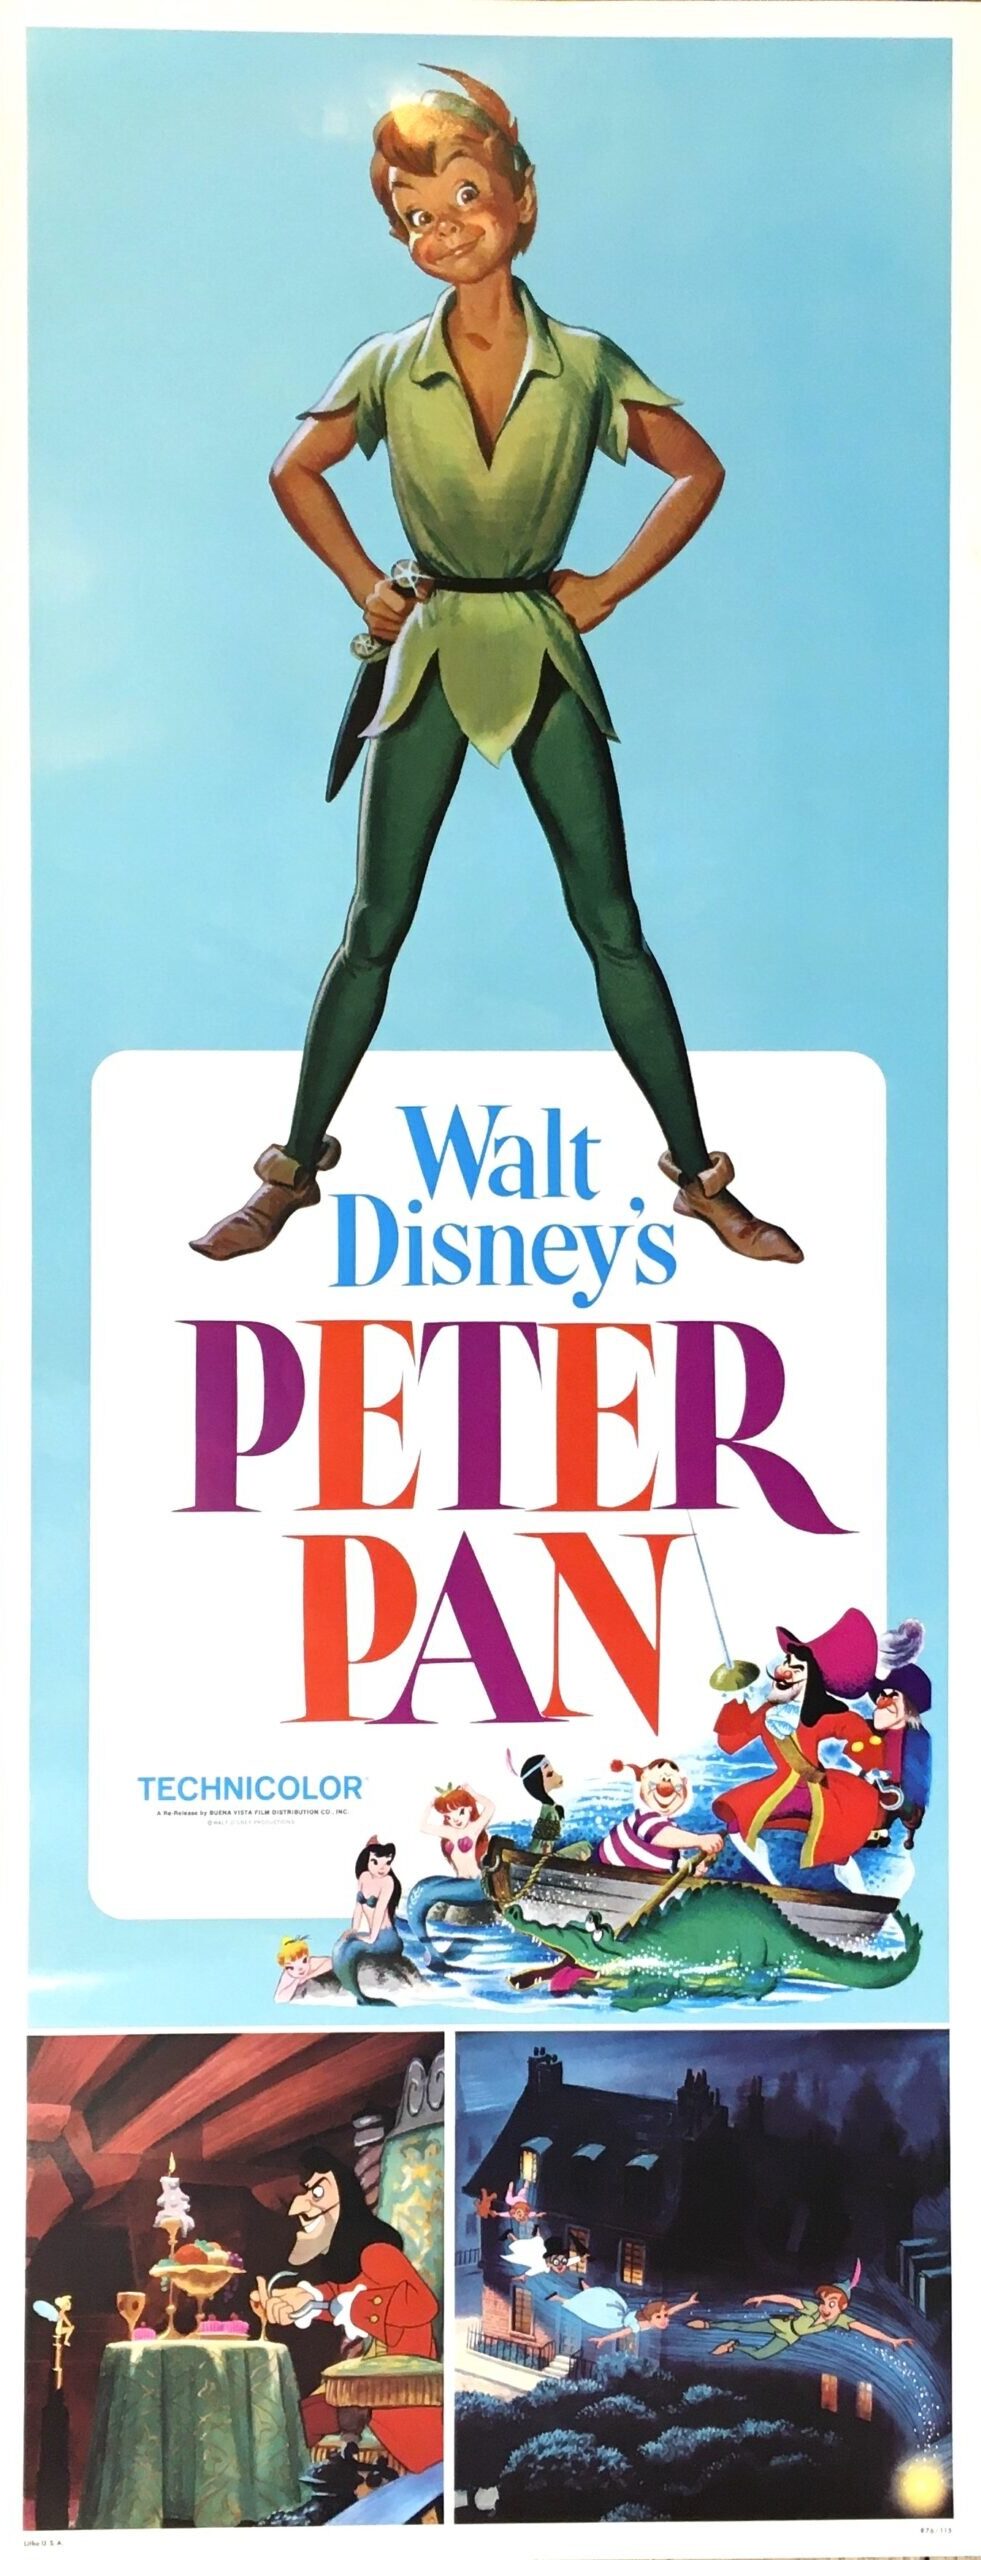 Vintage original US cinema poster for Disney's Peter Pan.